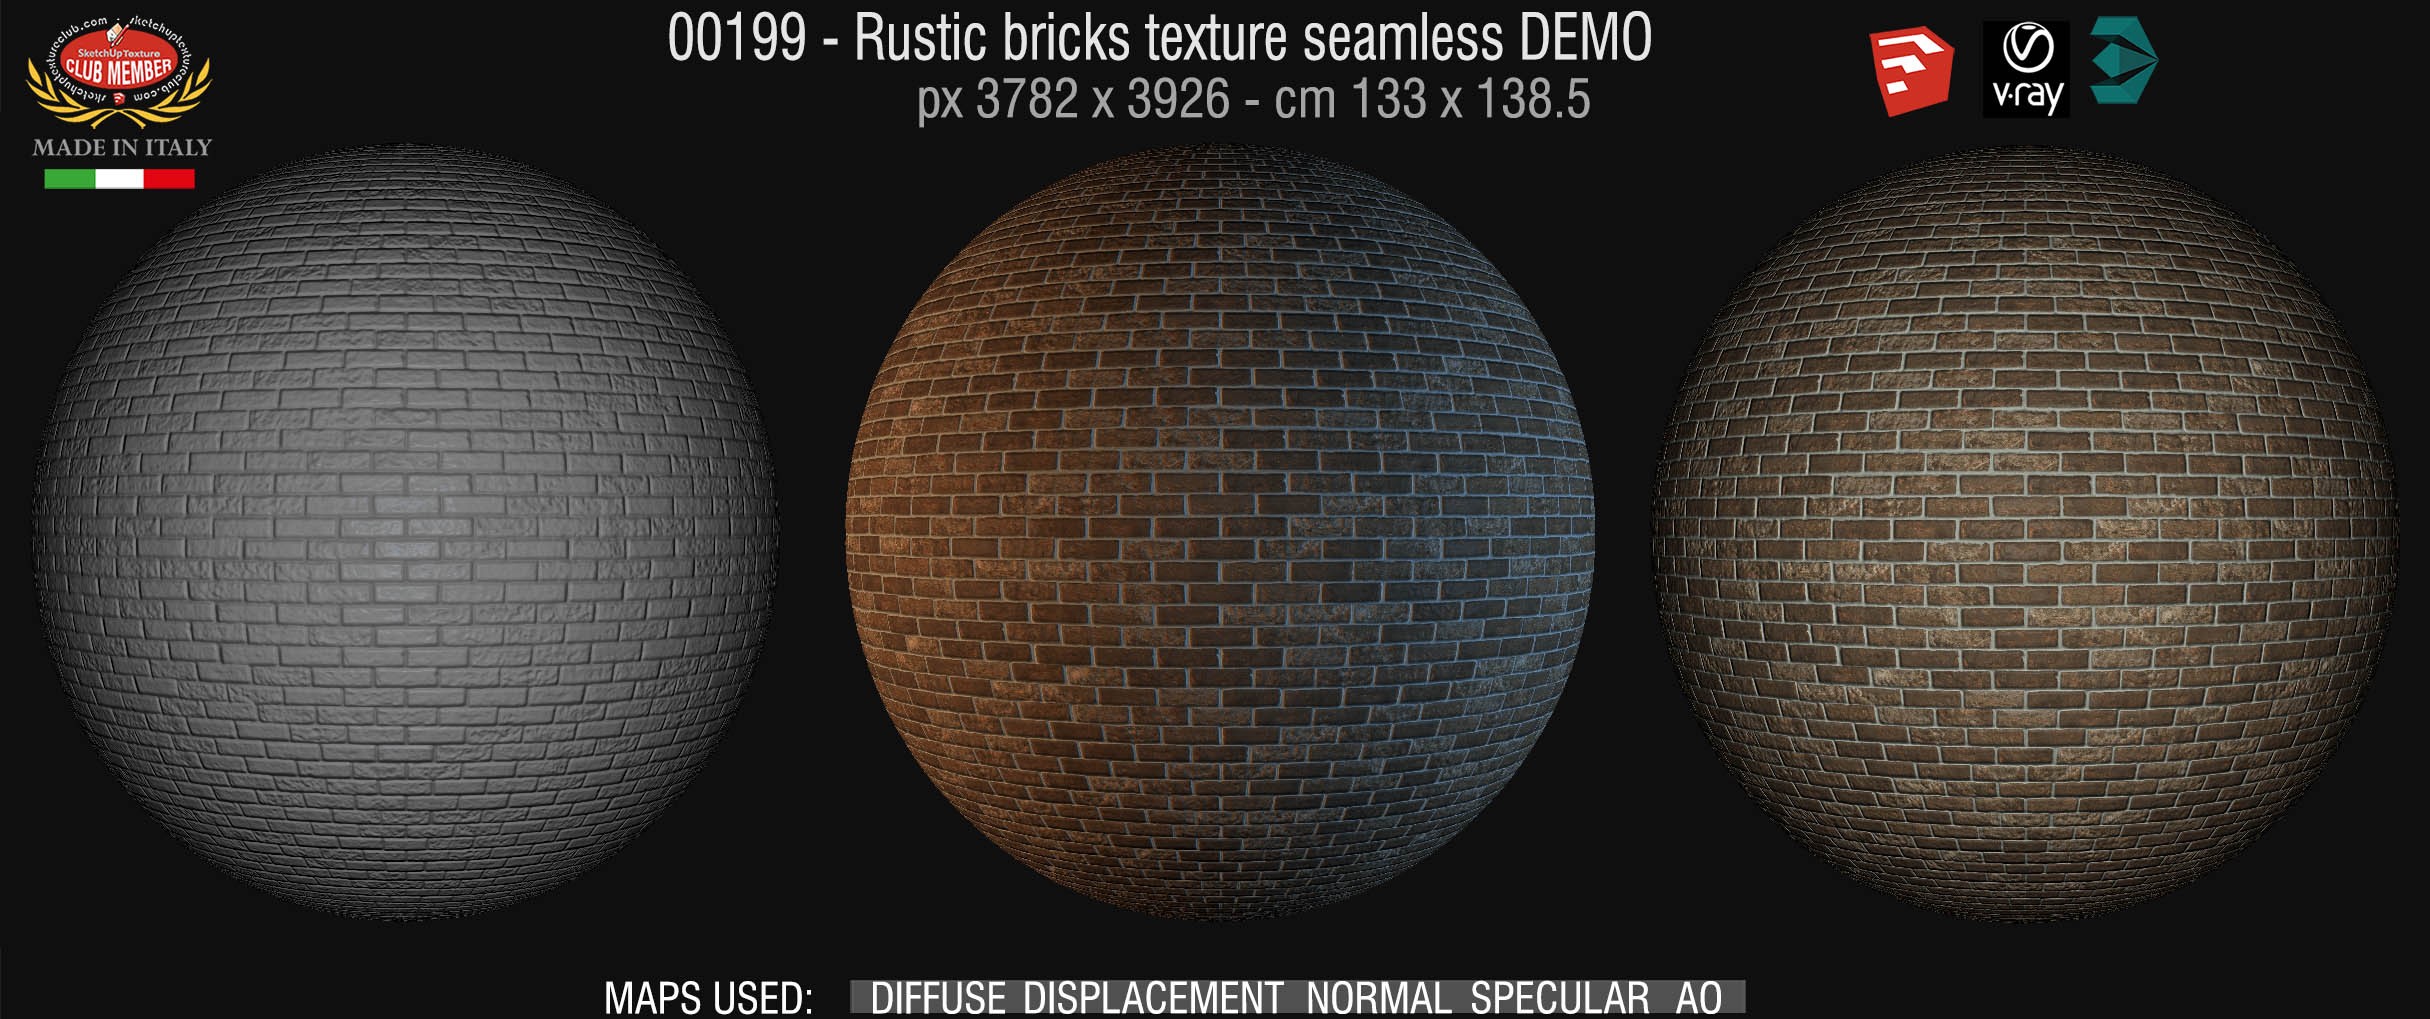 00199 Rustic bricks texture seamless + maps DEMO